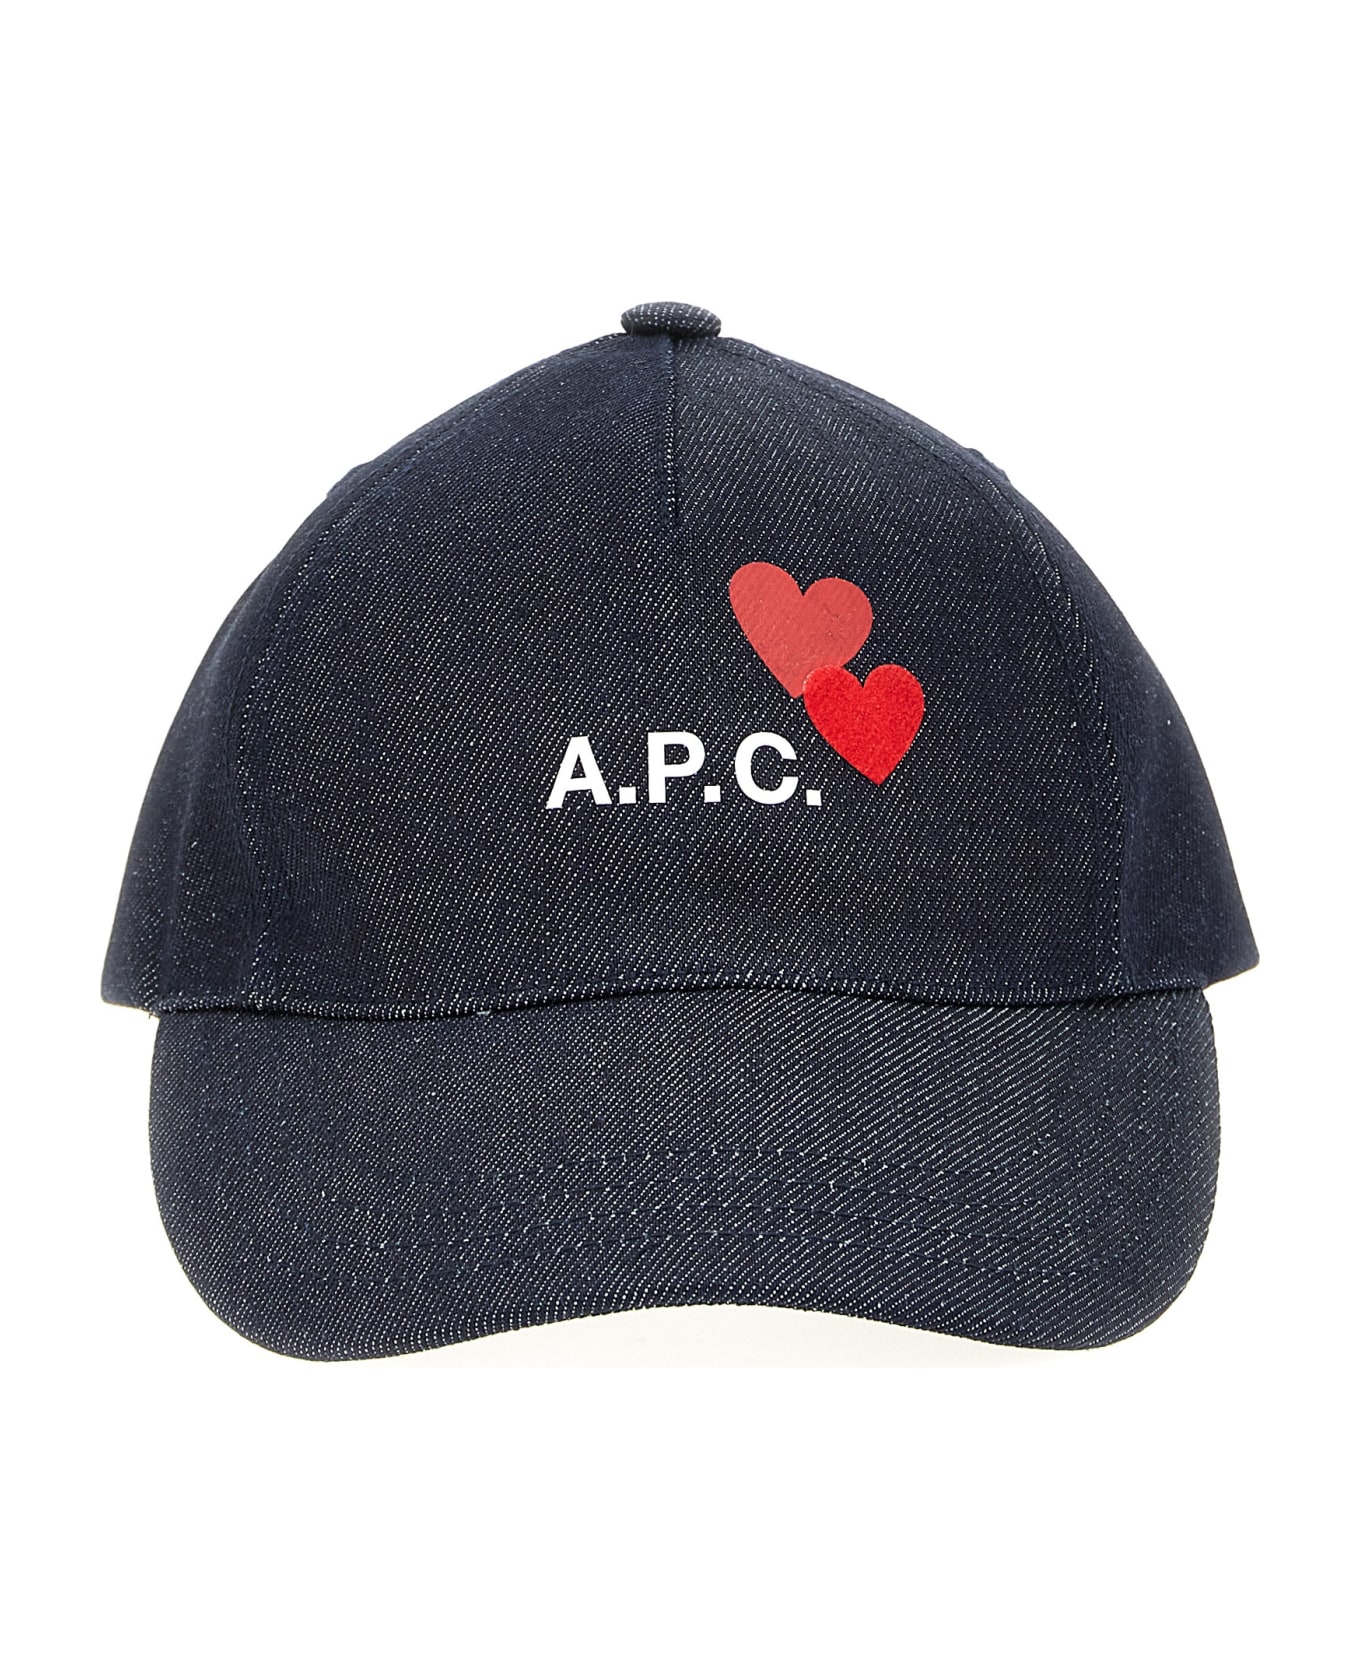 A.P.C. Eden Blondie Baseball Cap - INDIGO 帽子